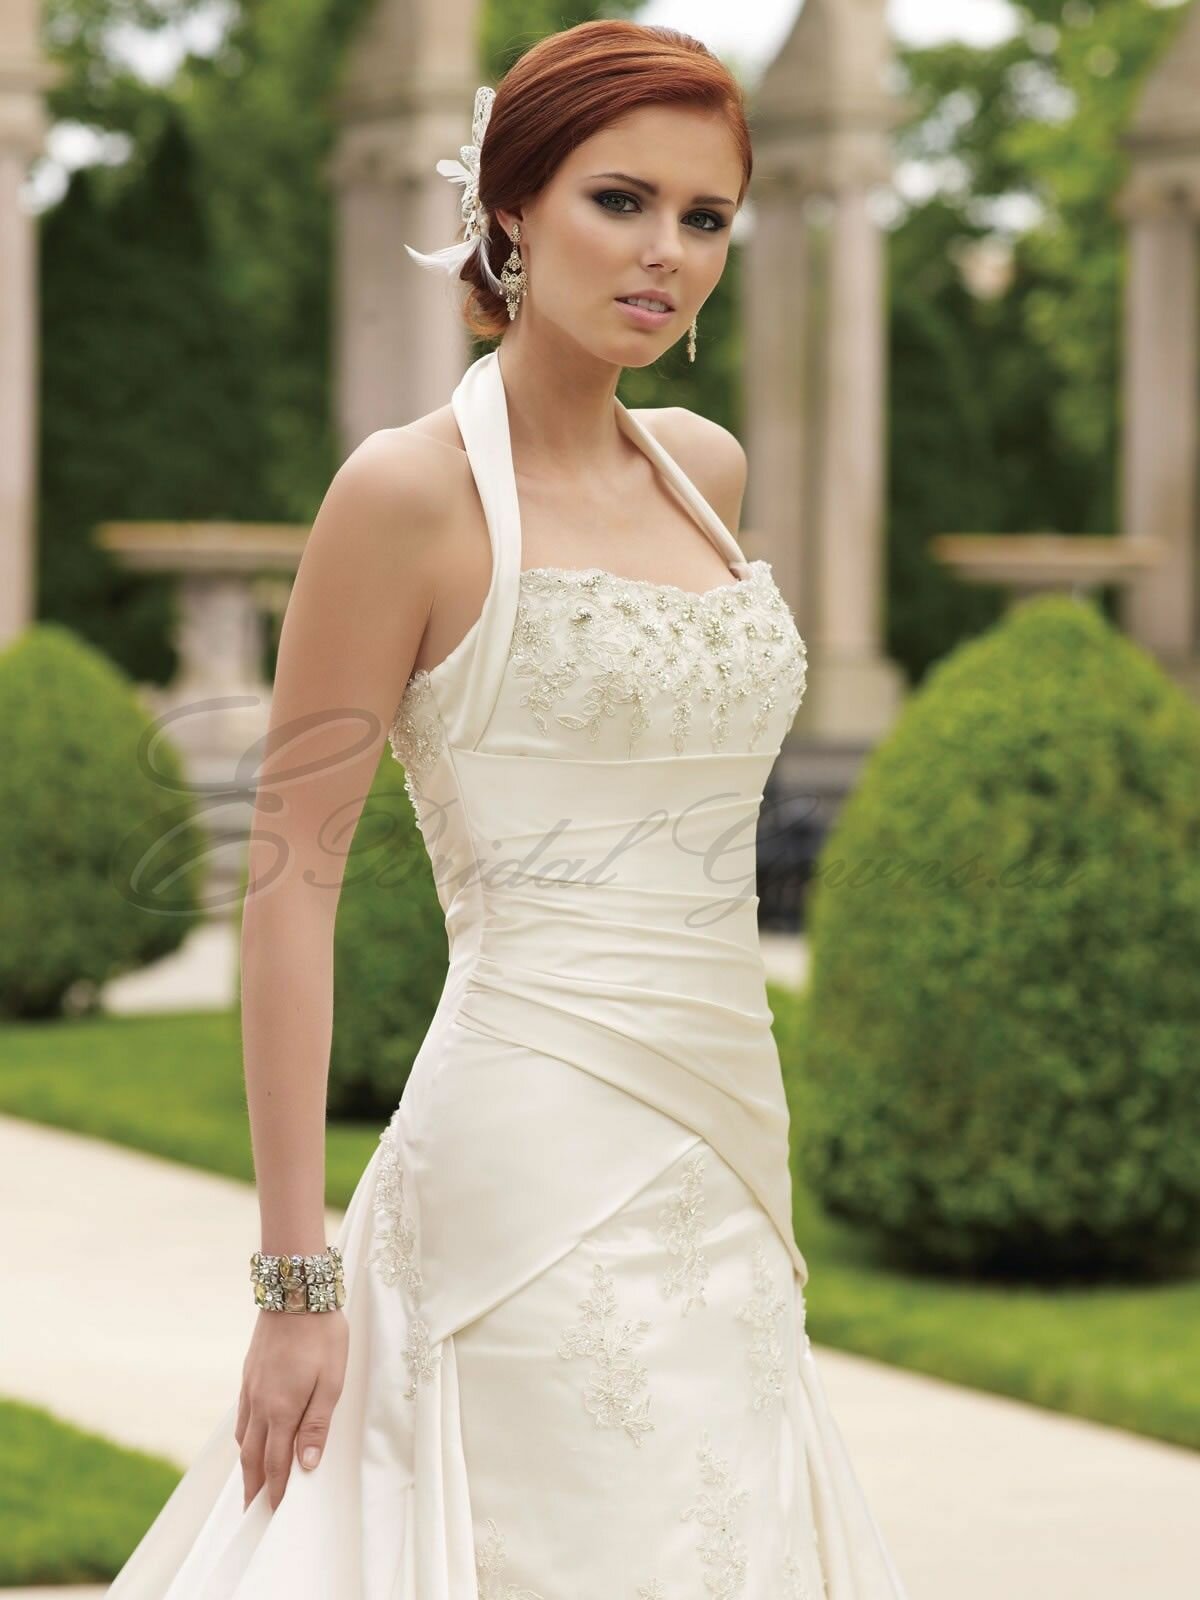 Top wedding dresses designers Photo - 10